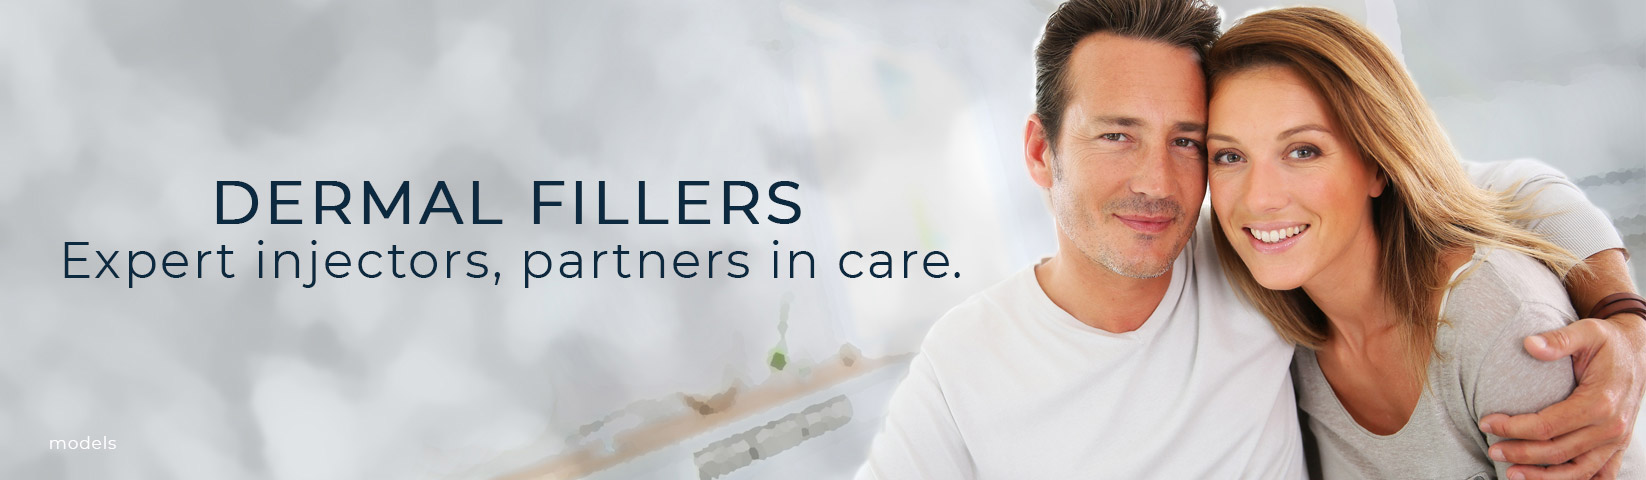 Dermal Fillers: Expert injectors, partners in care